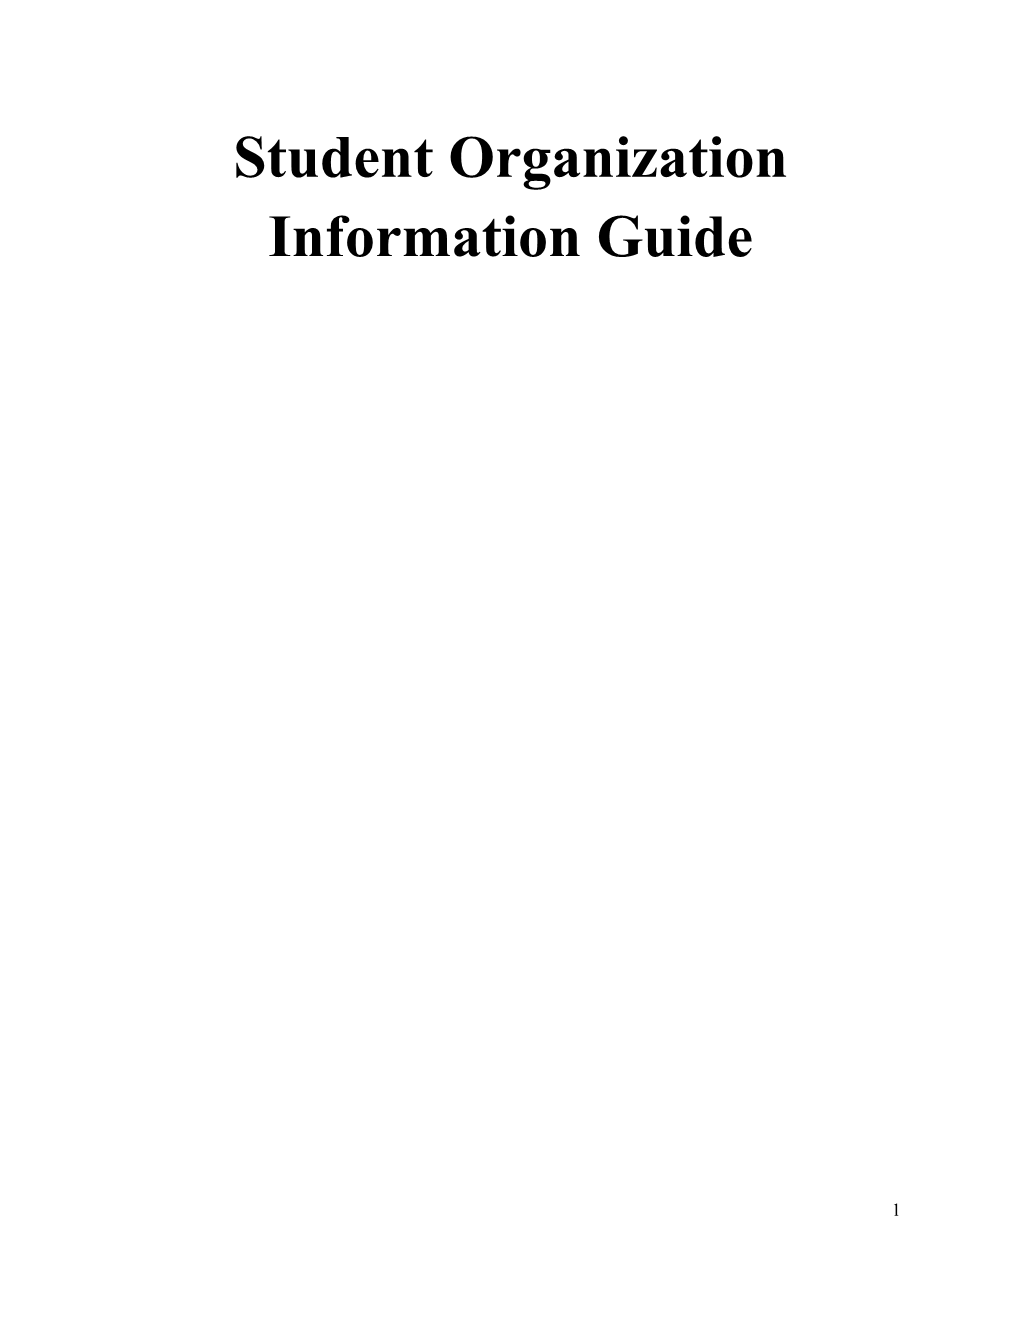 Student Organization Information Guide